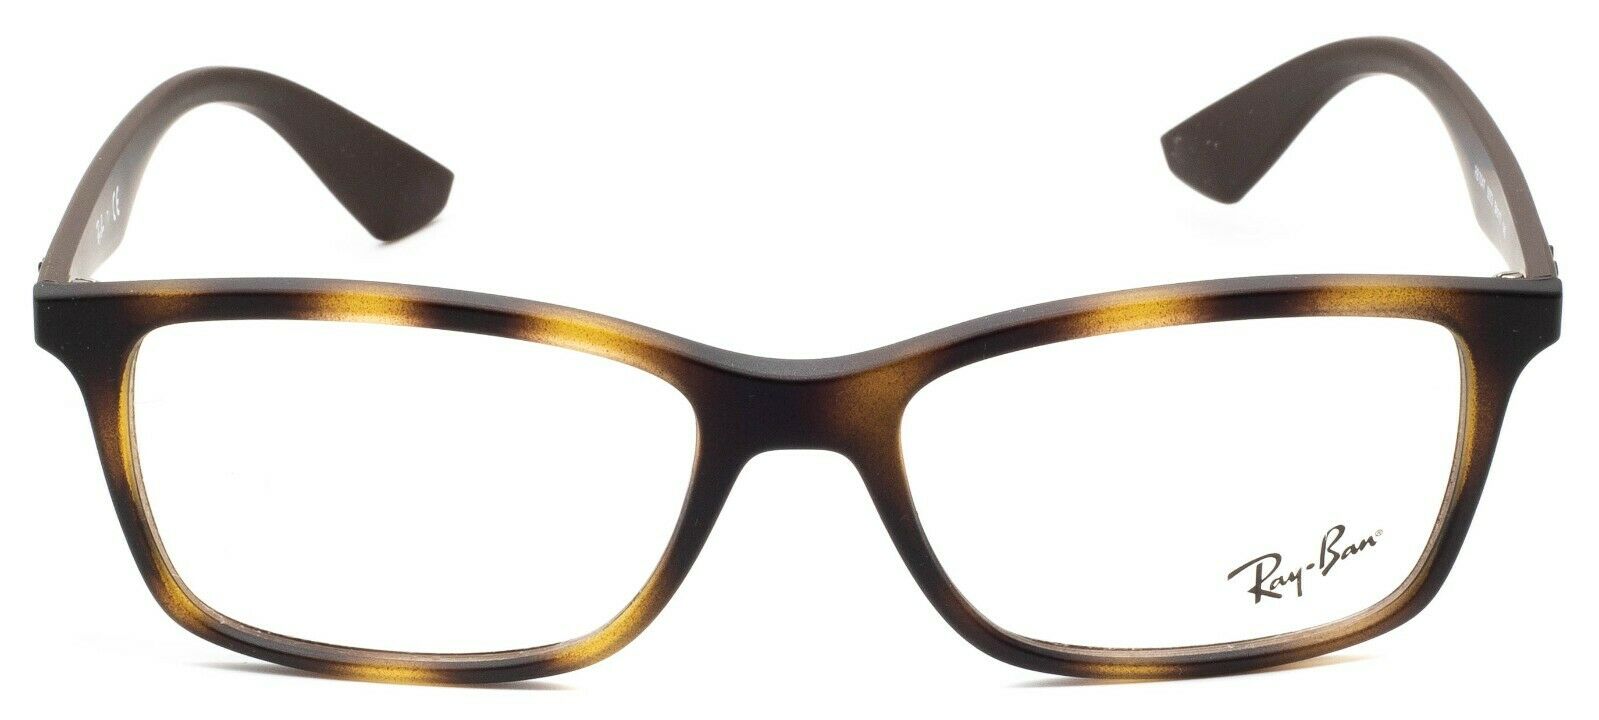 Buskruit Inefficiënt Kinderpaleis RAY BAN RB 7047 5573 54mm FRAMES RAYBAN Glasses RX Optical Eyewear  EyeglassesNew - GGV Eyewear